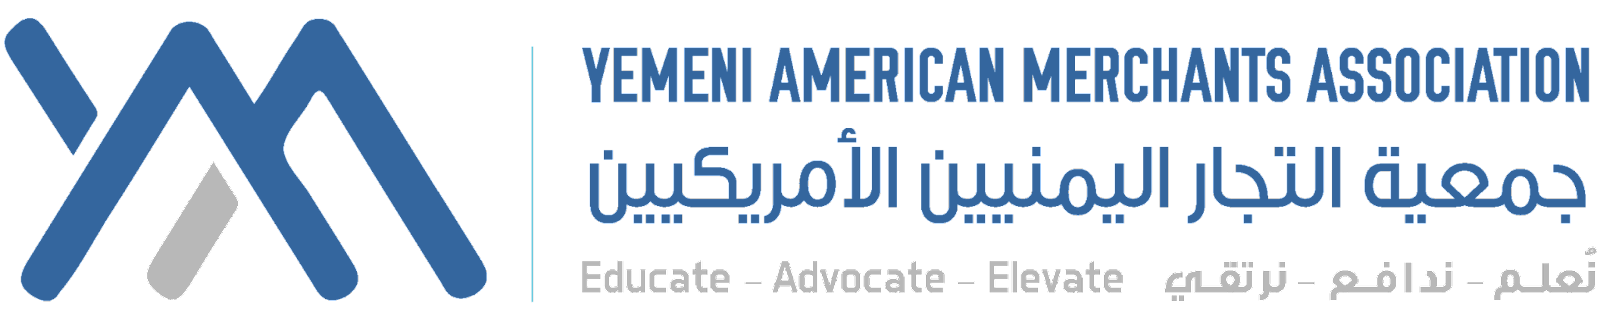 Yemeni American Merchants Association